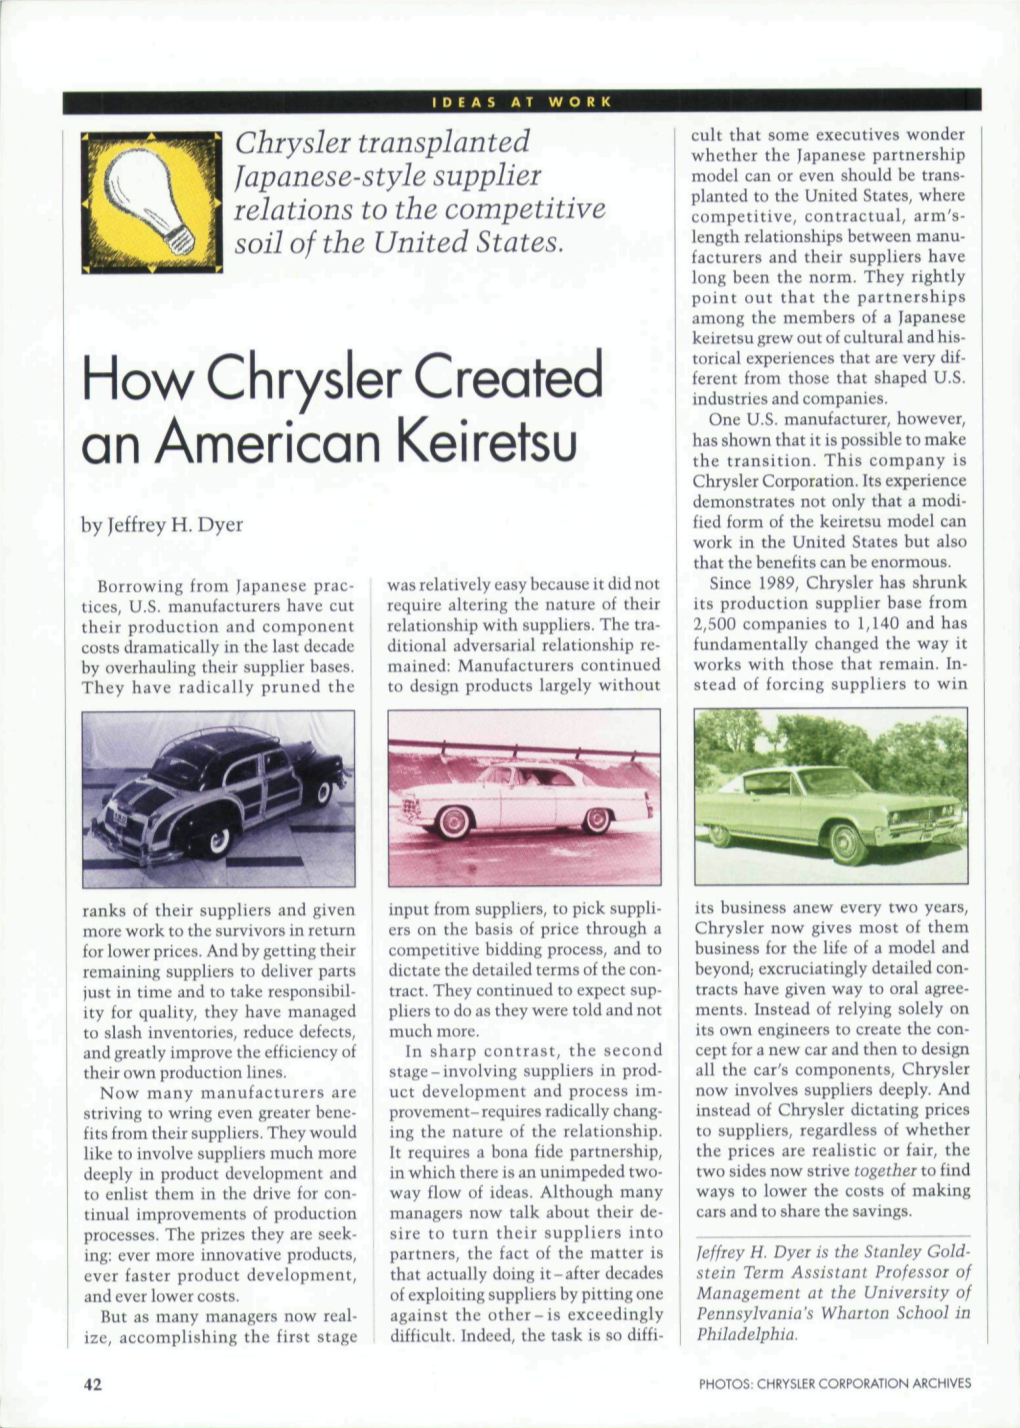 How Chrysler Created an American Keiretsu